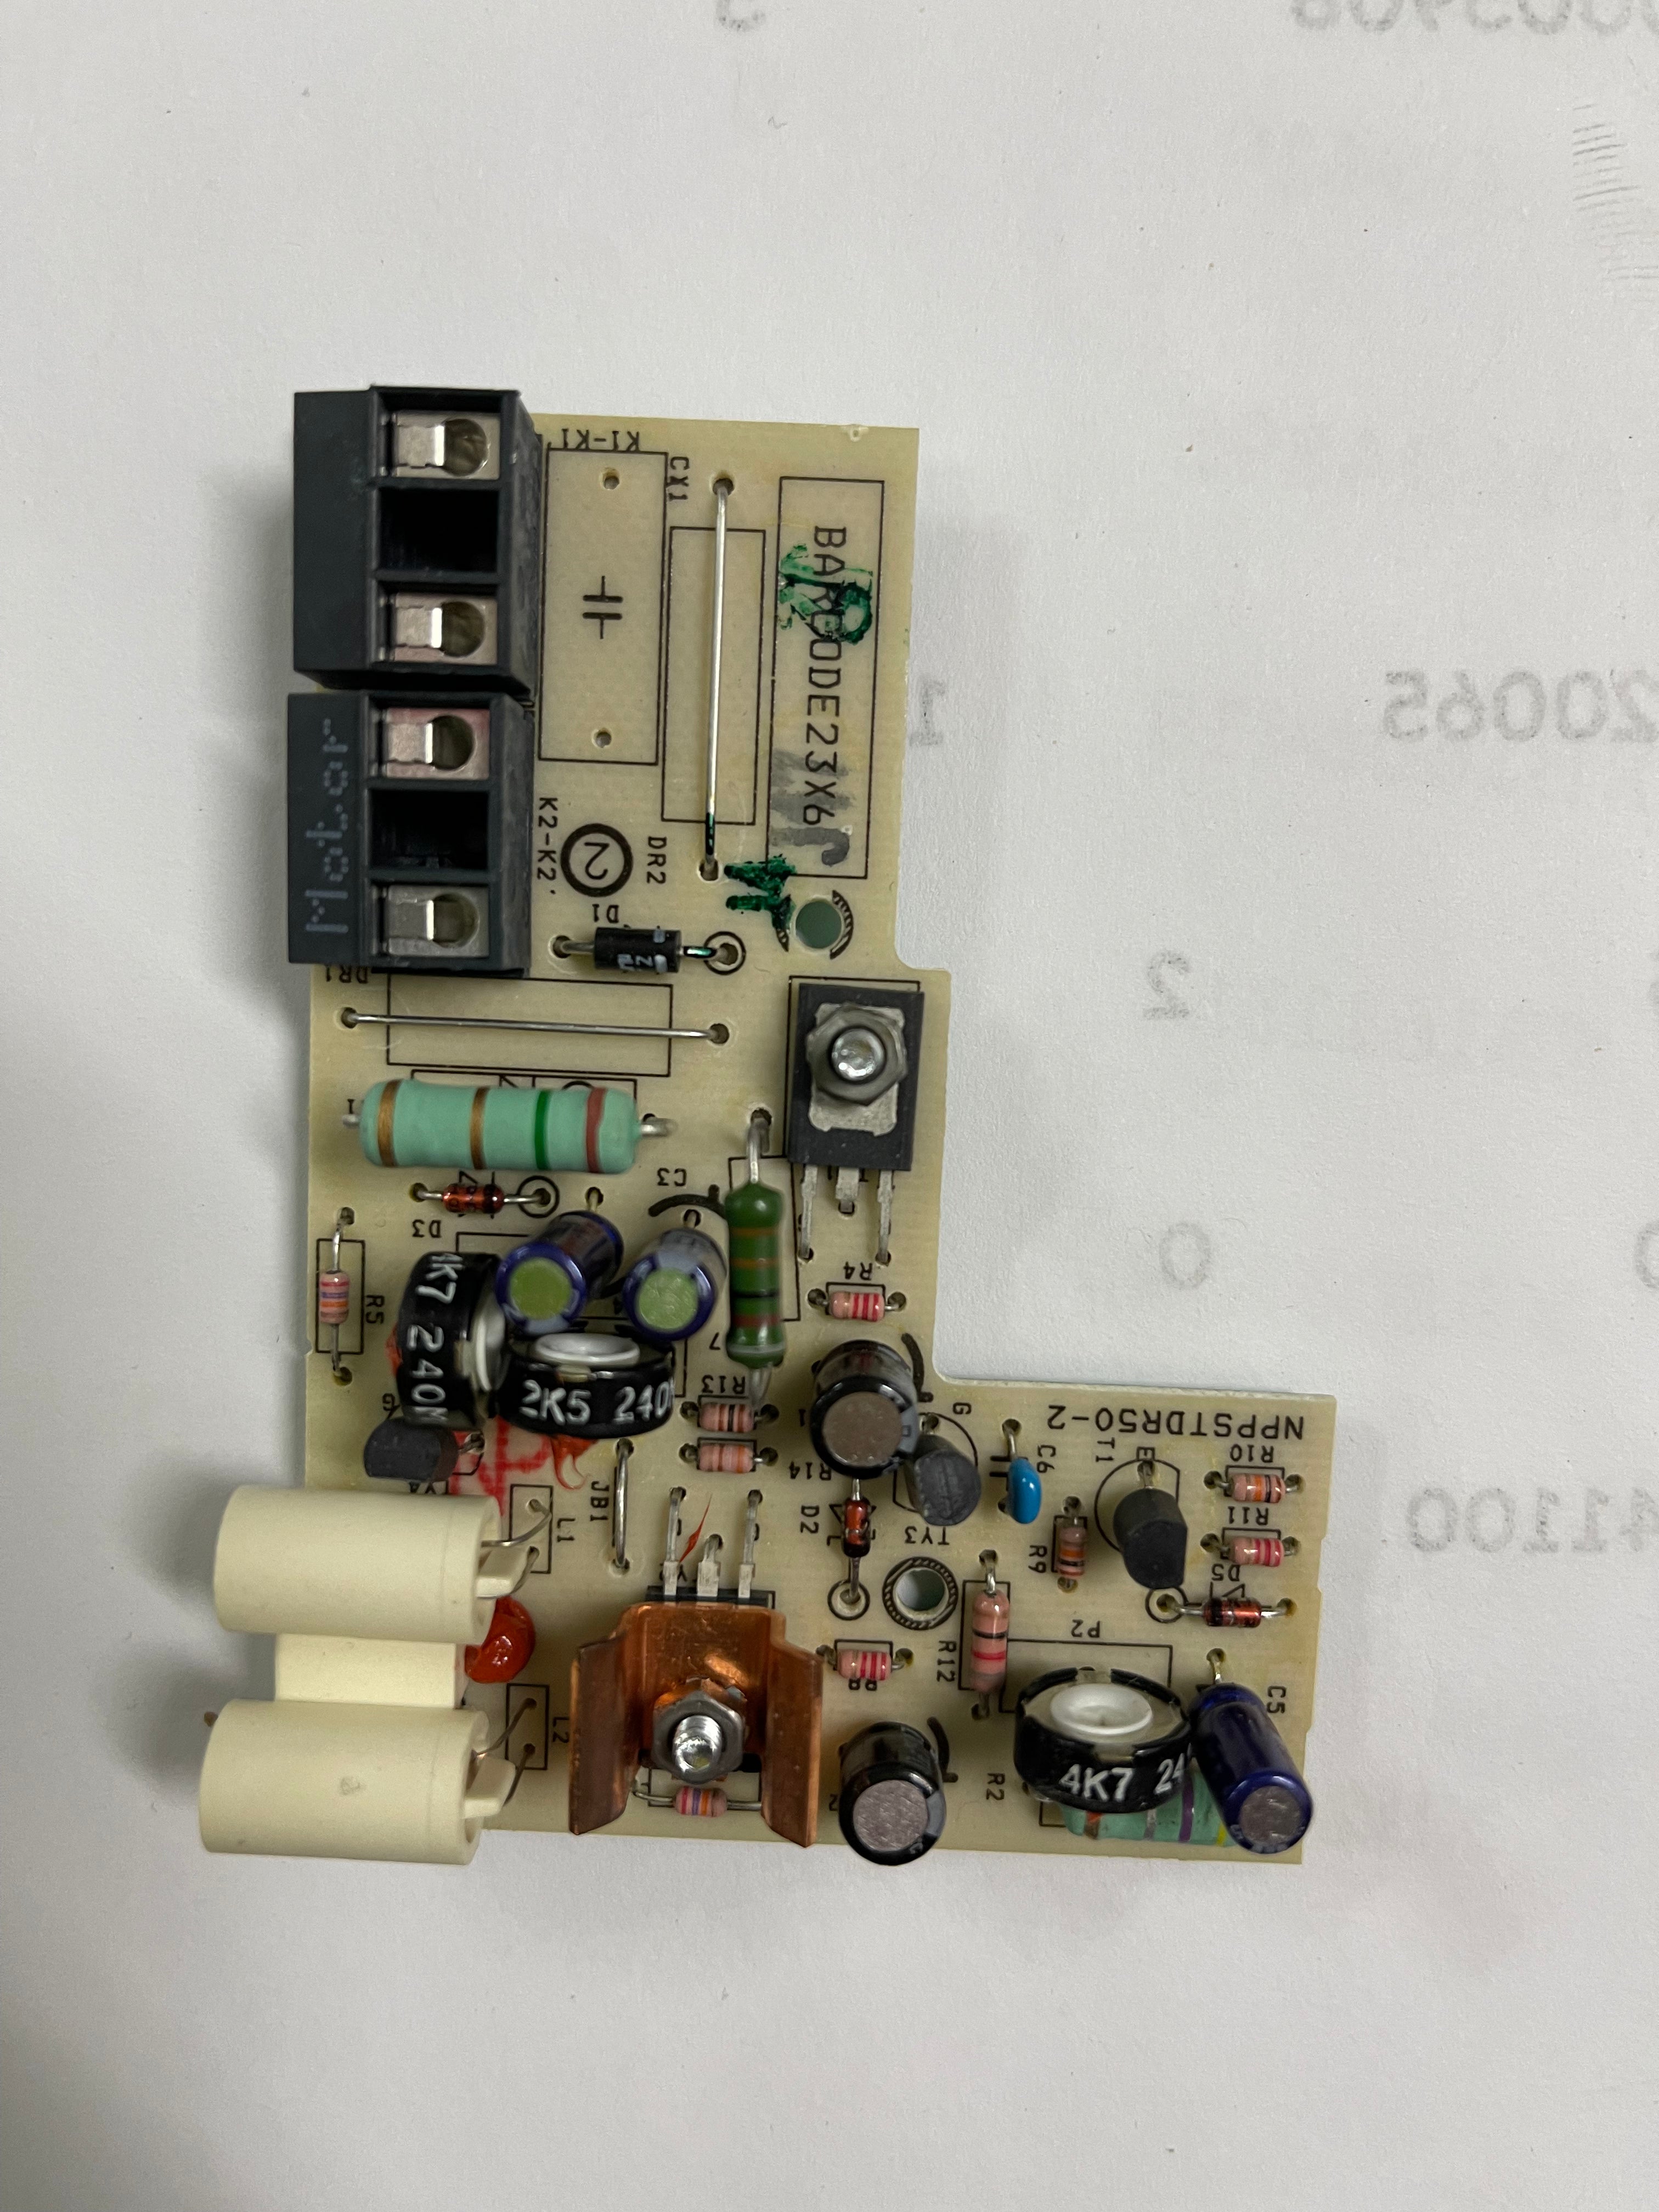 Sebo PCB - Printed Circuit Board